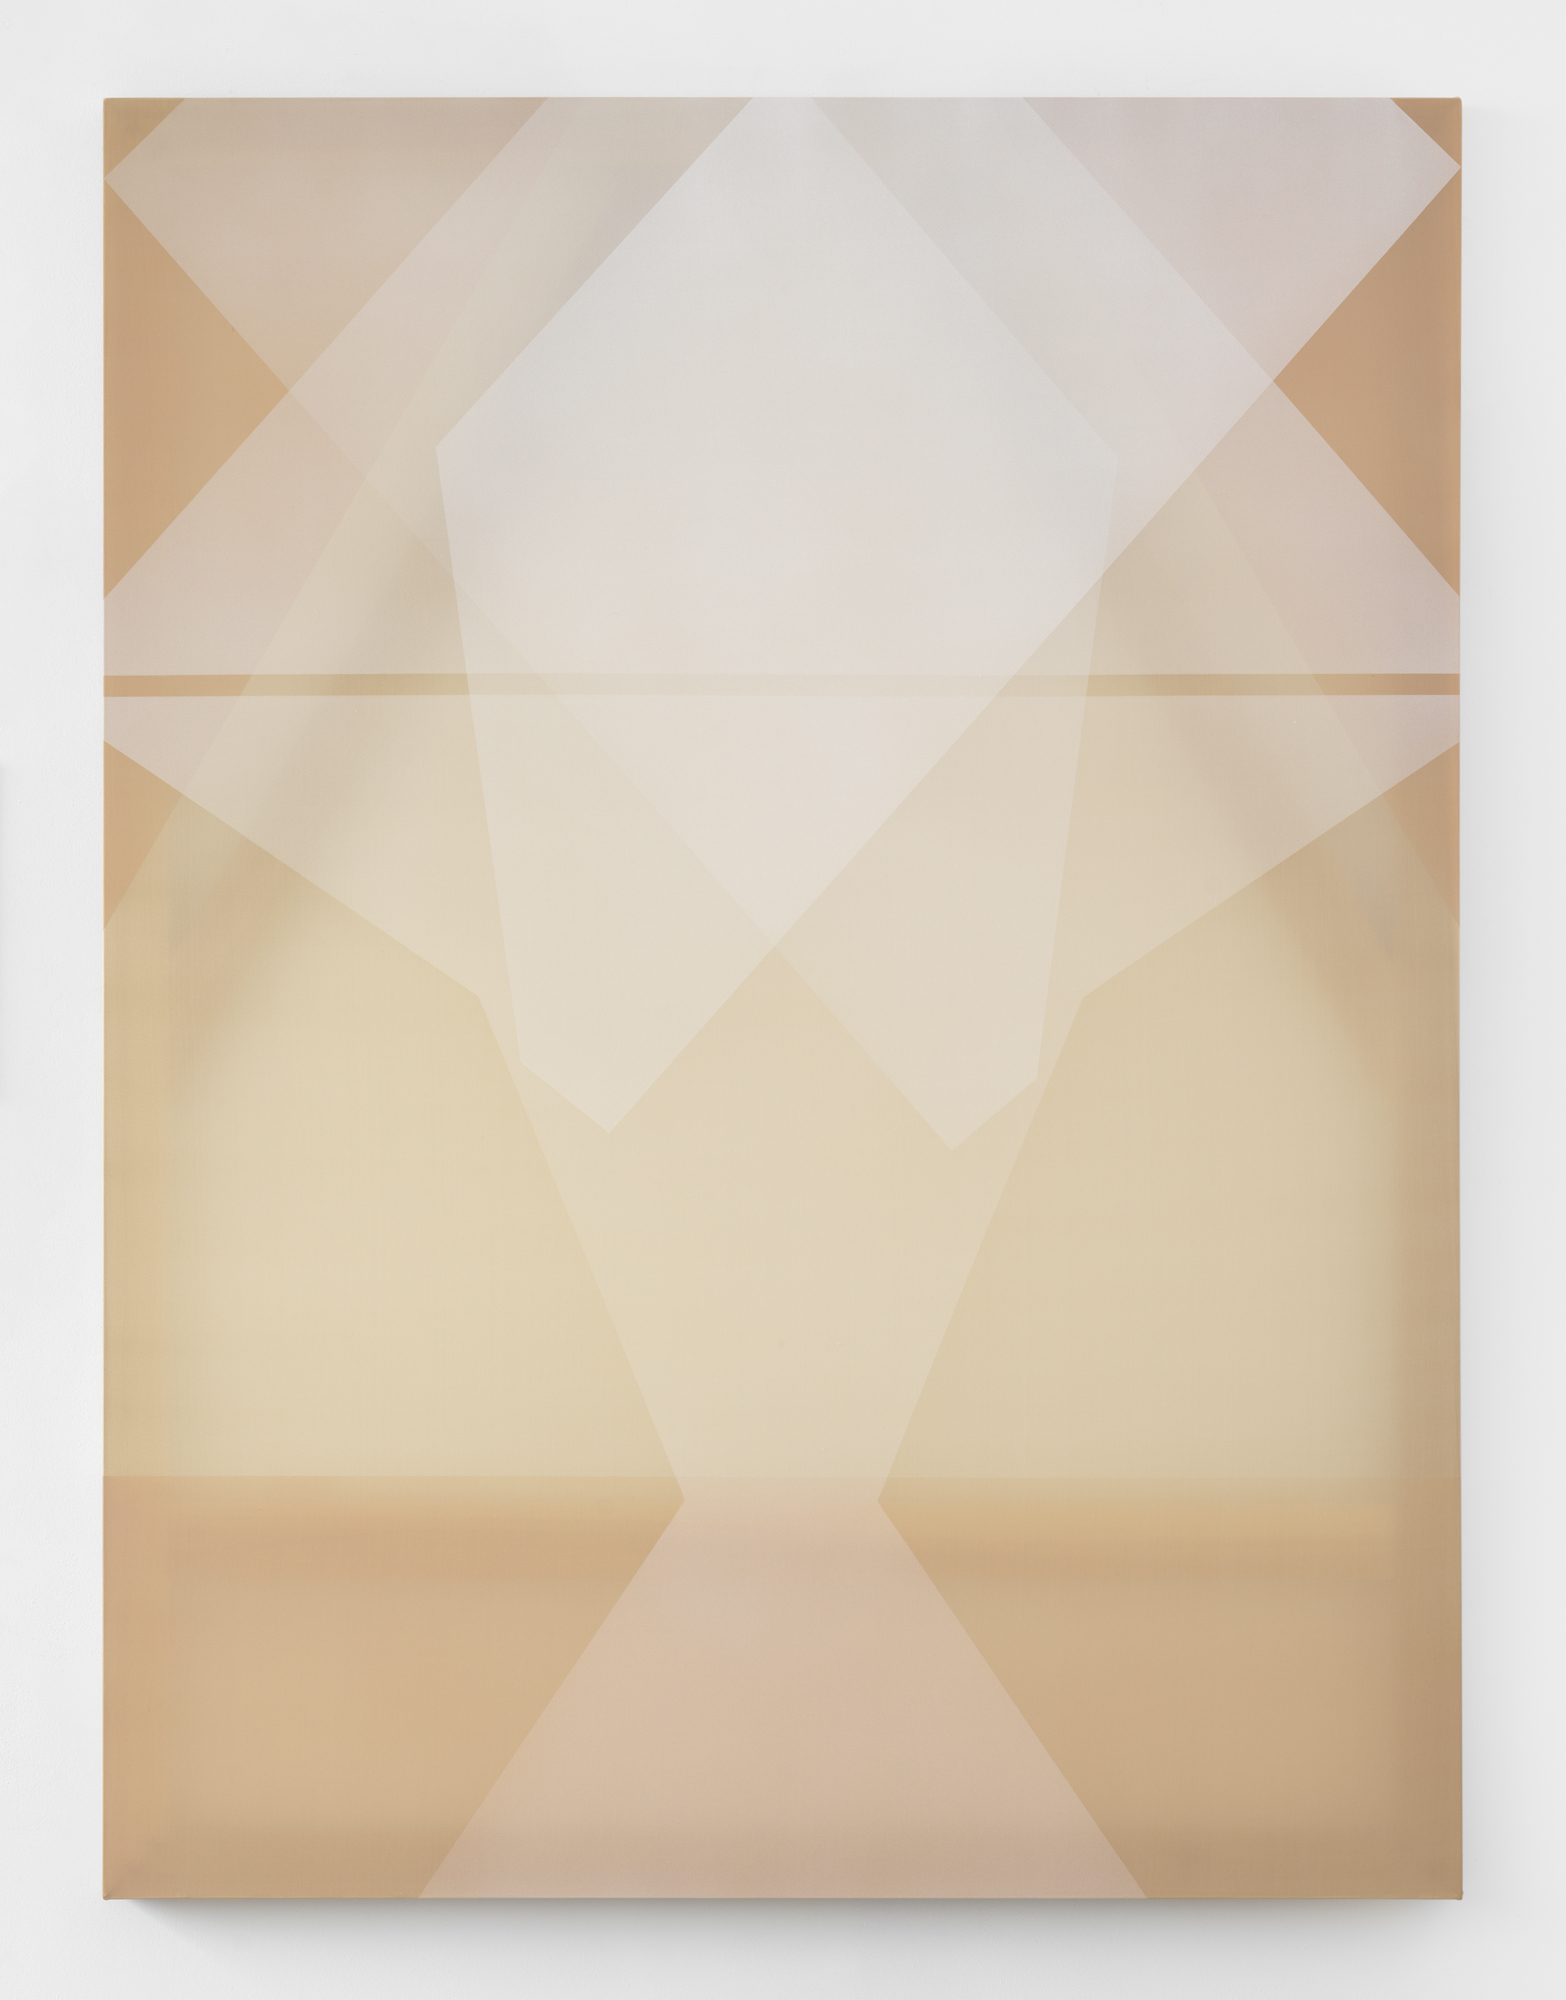   white morph  2018 acrylic on silk 60 in x 45 in  